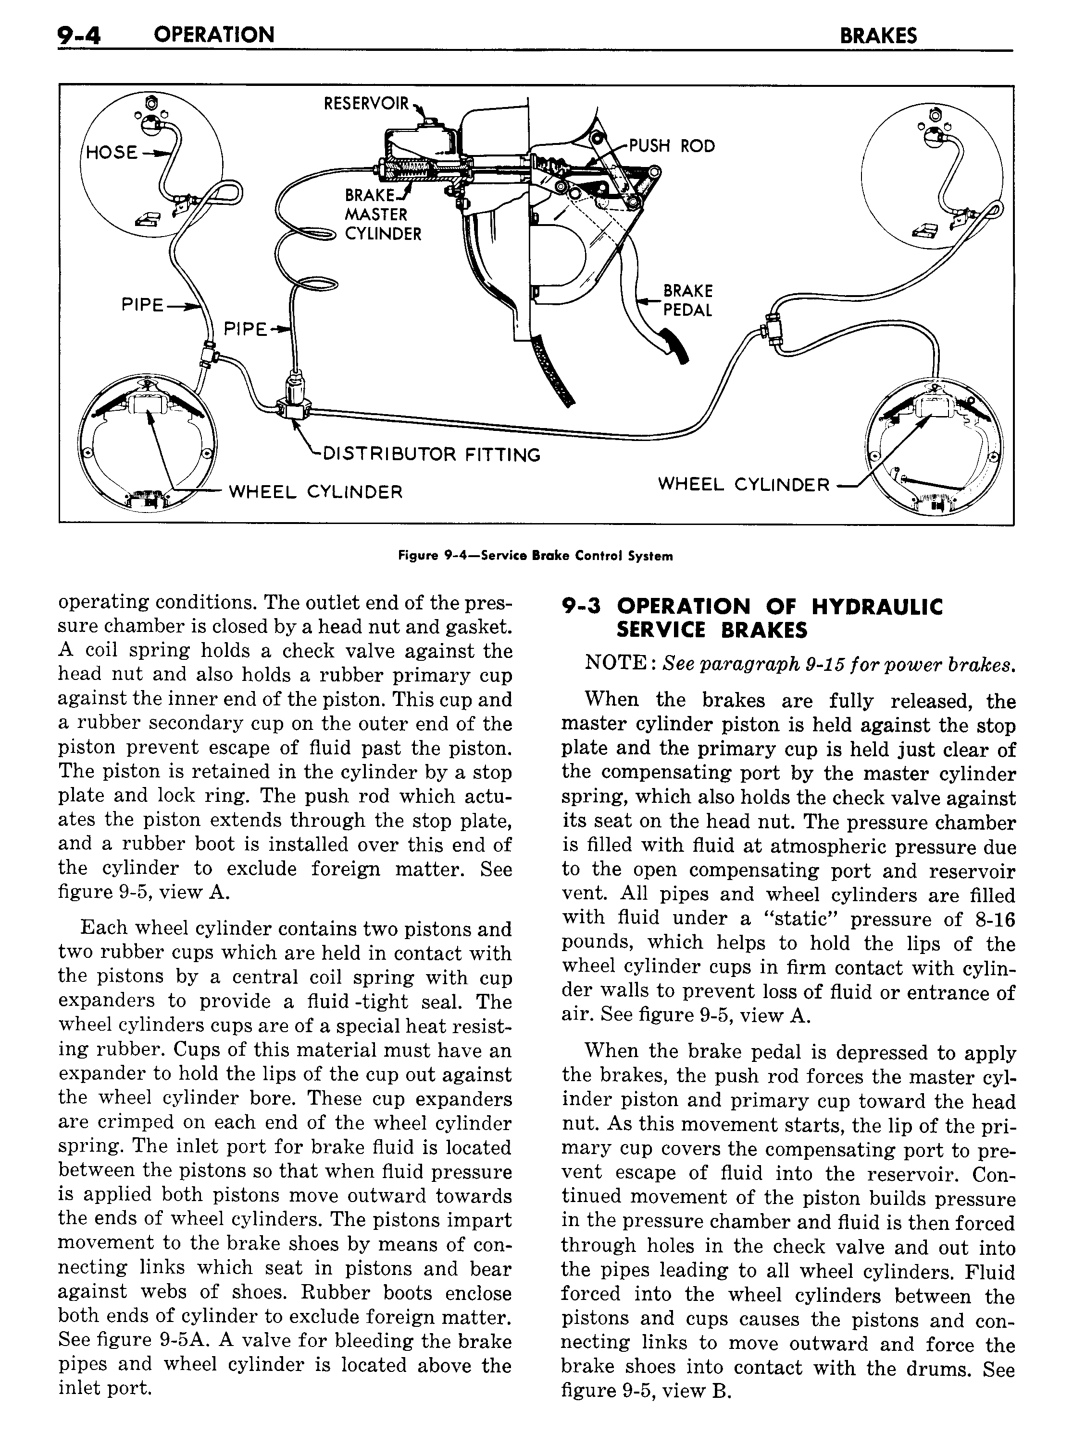 n_10 1957 Buick Shop Manual - Brakes-004-004.jpg